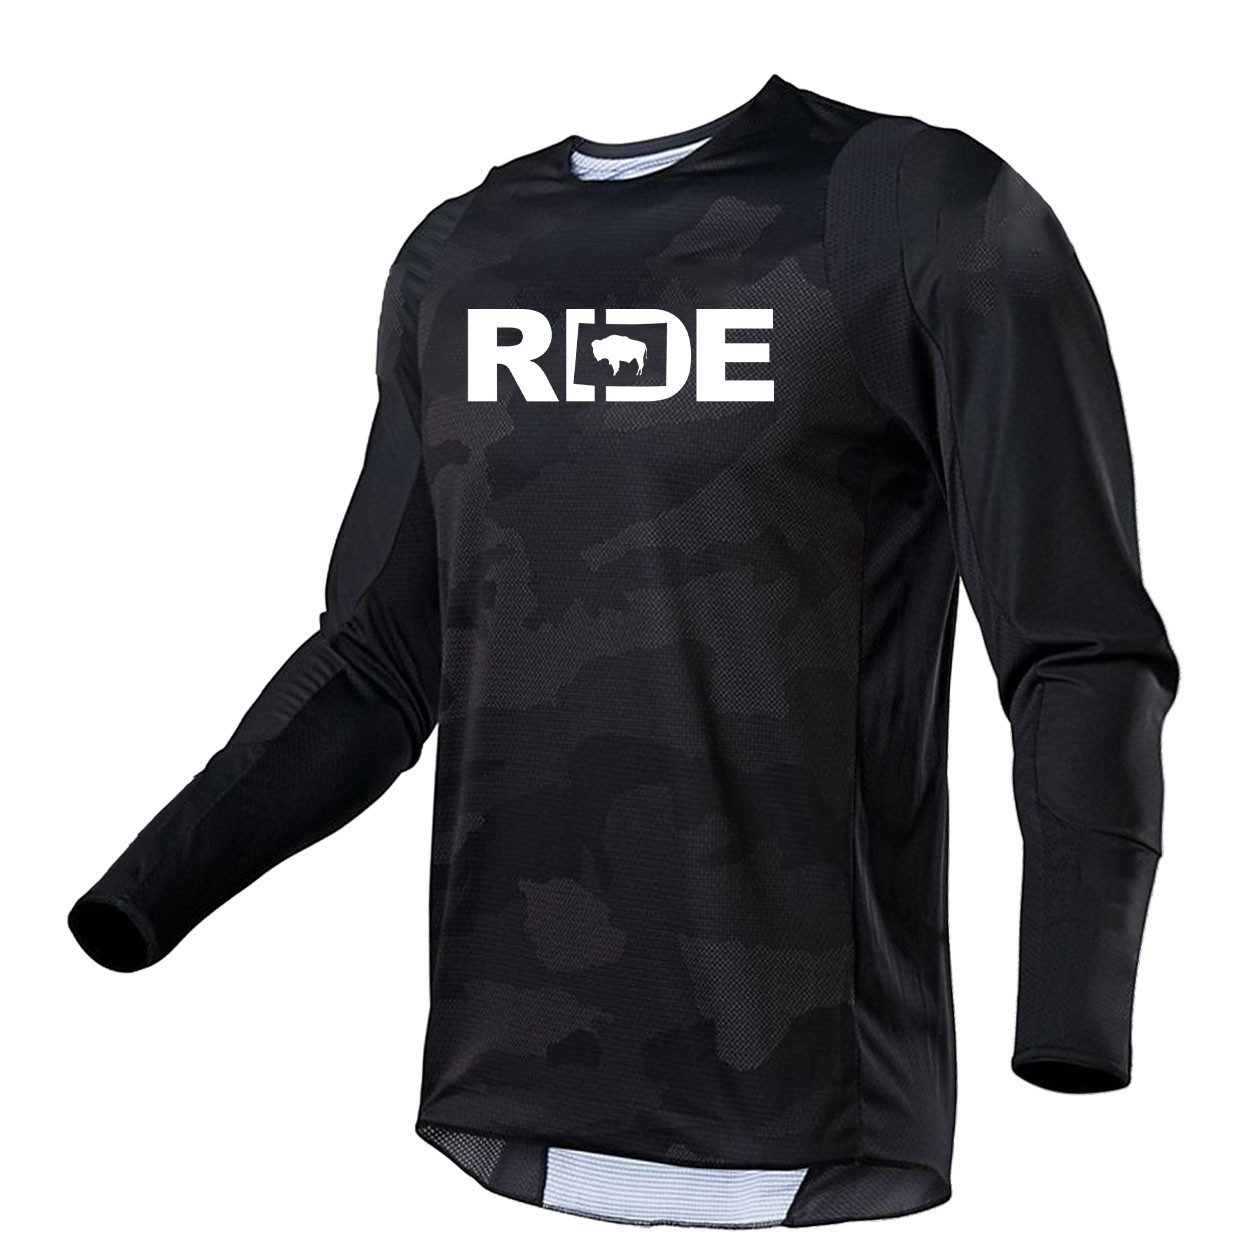 Ride Wyoming Classic Performance Jersey Long Sleeve Shirt Black Camo